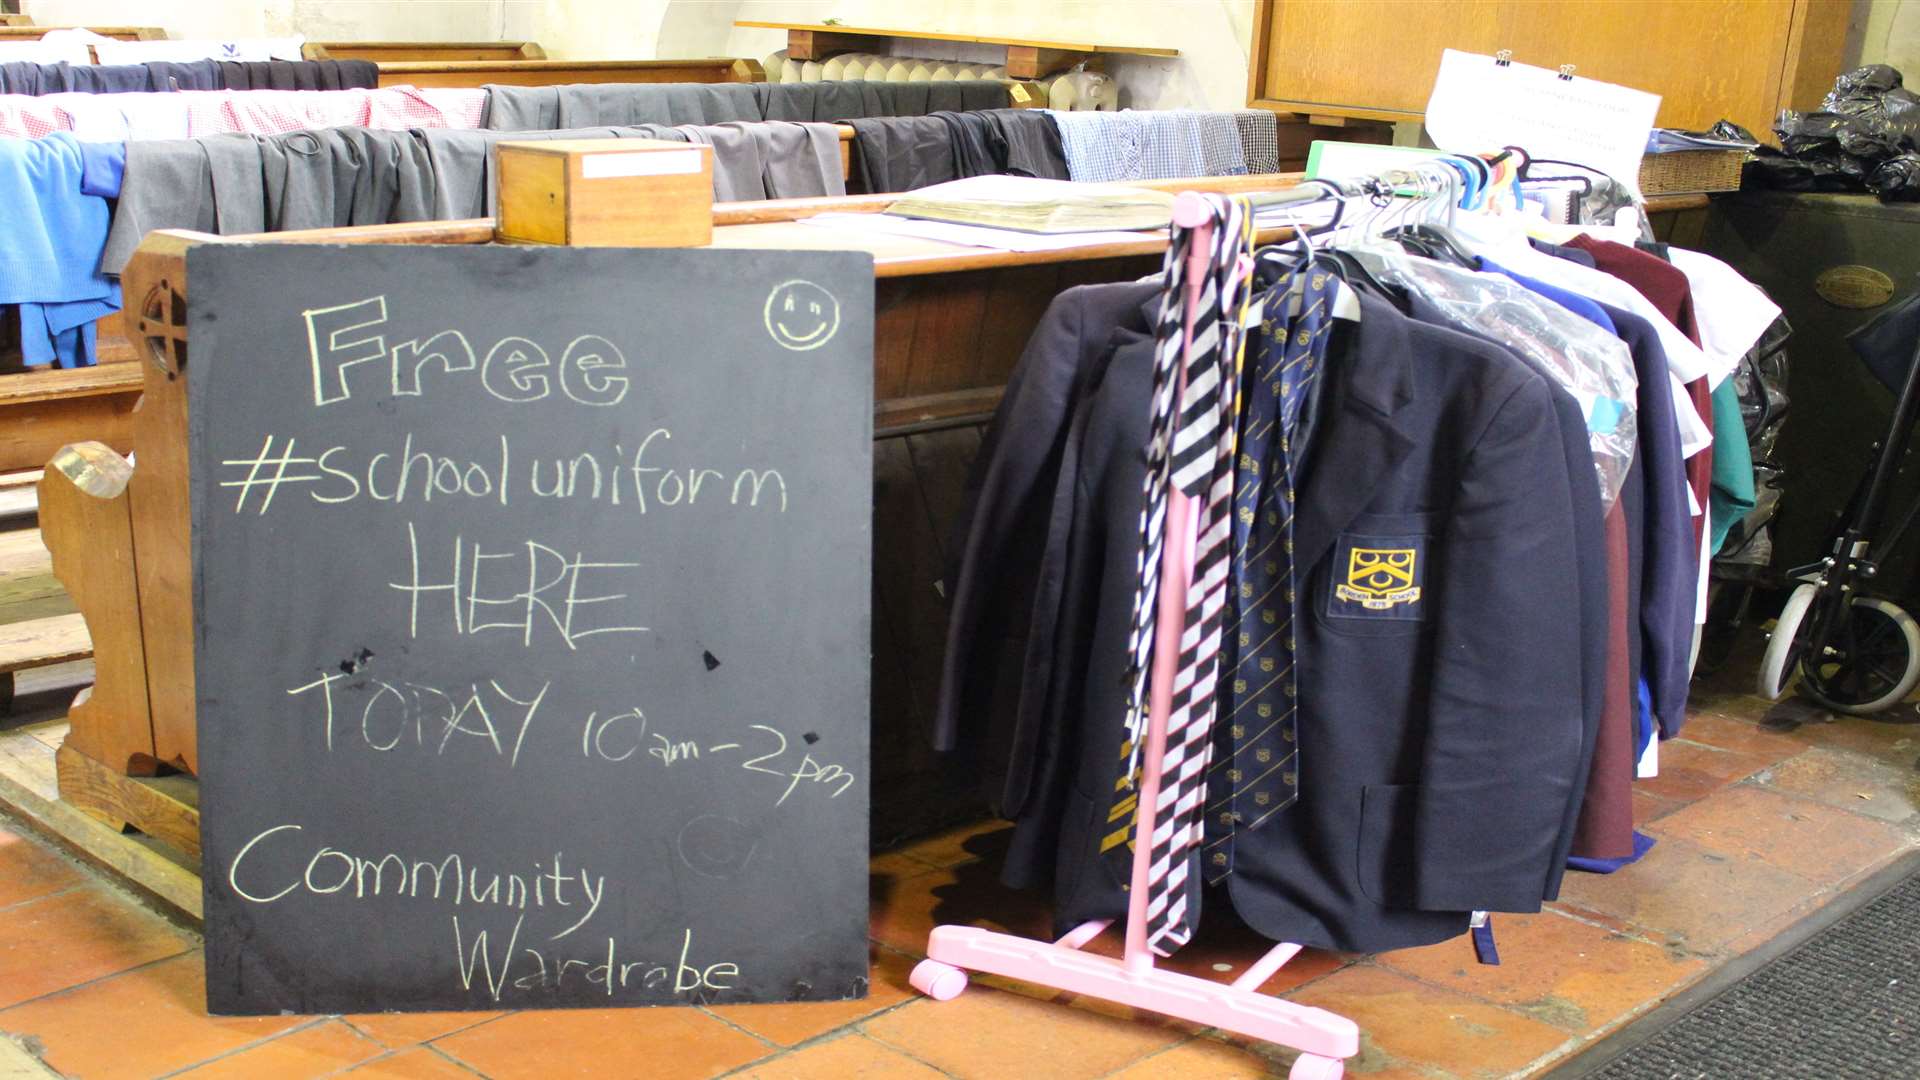 The second community wardrobe in Sittingbourne